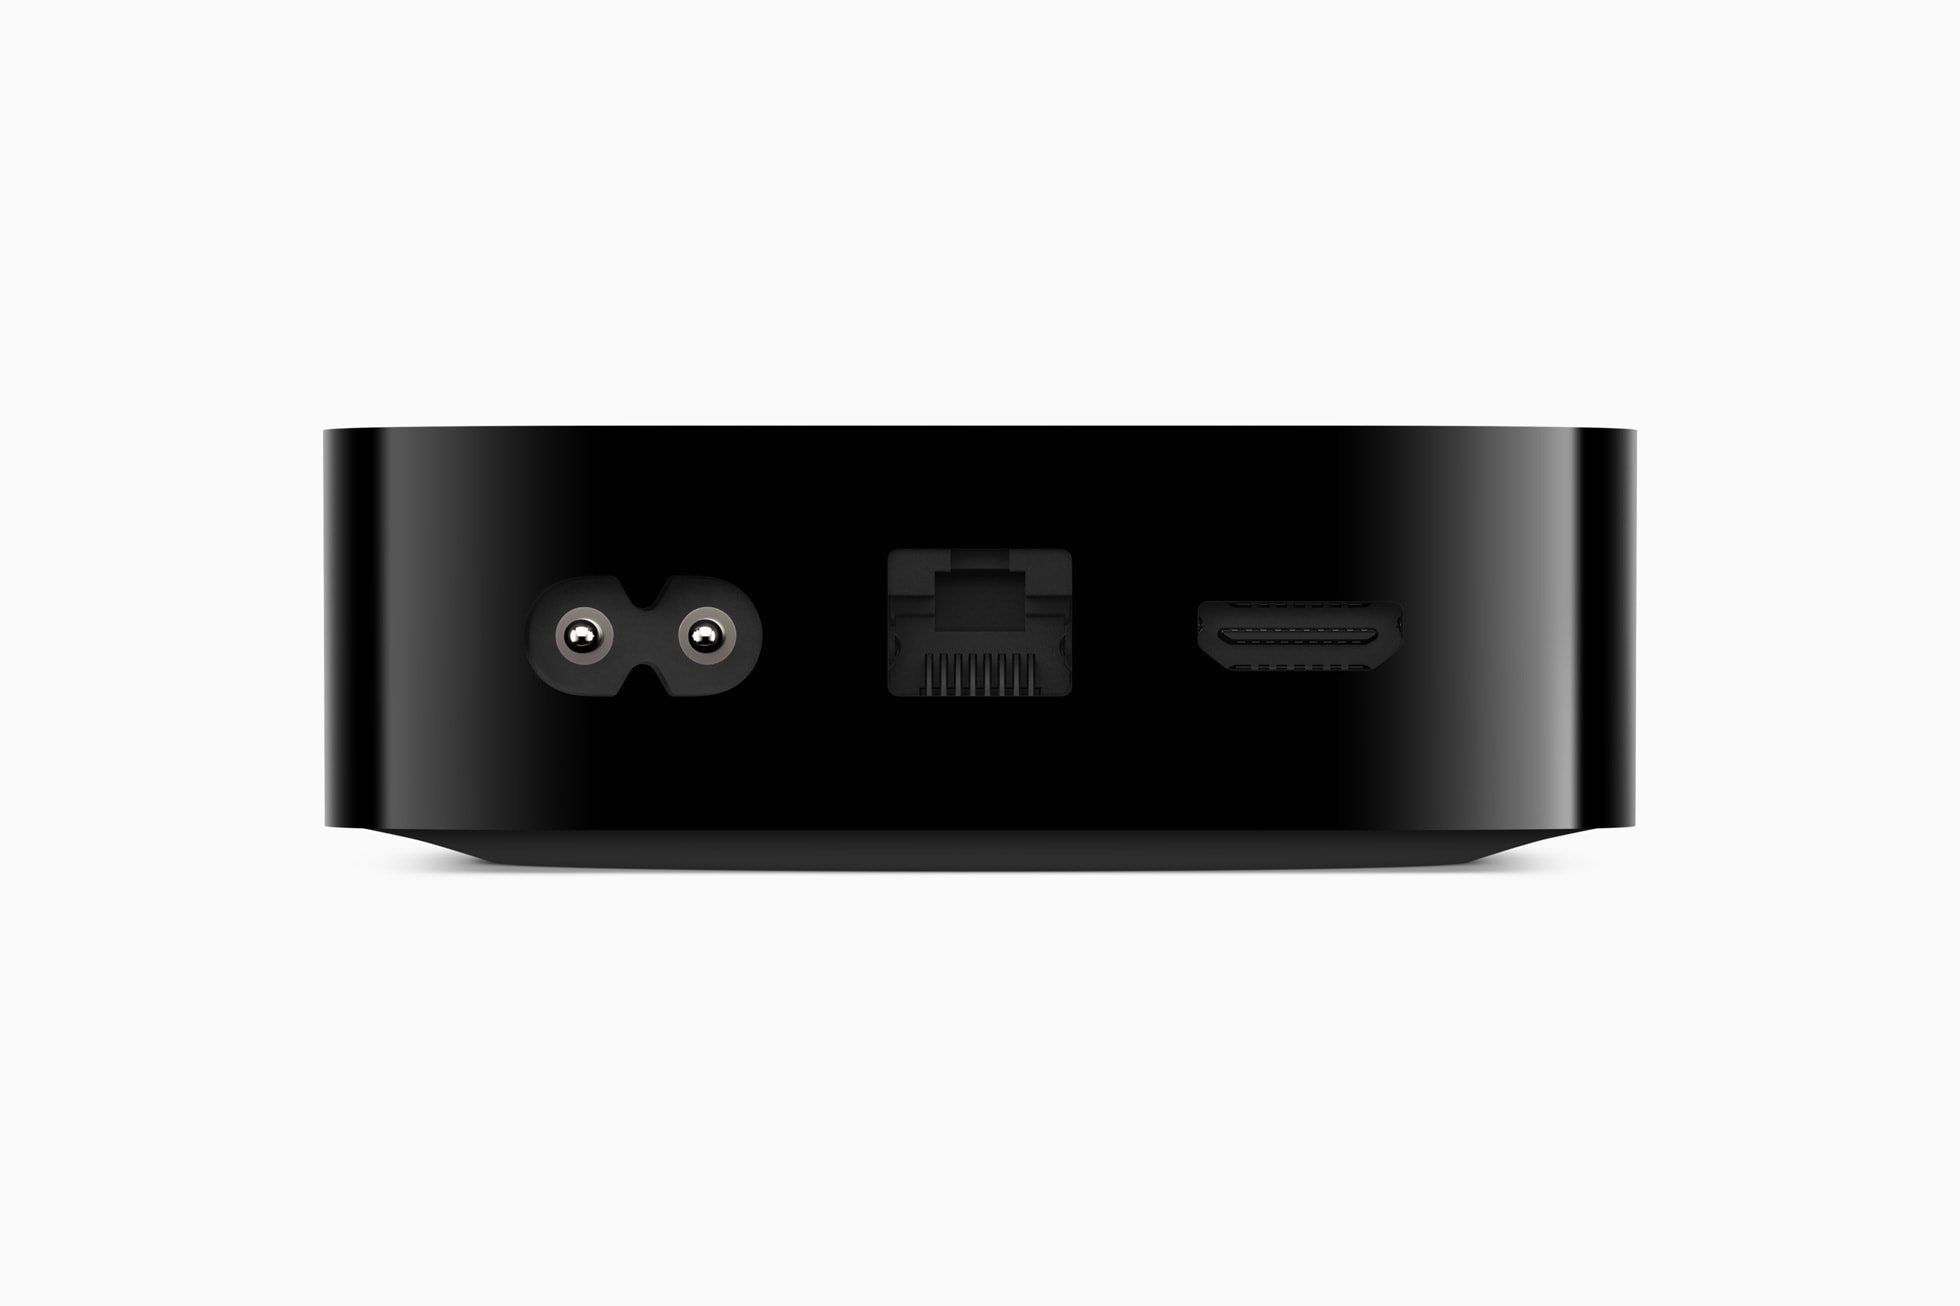 Apple-TV-4K-ports-with-ethernet-221018.jpg